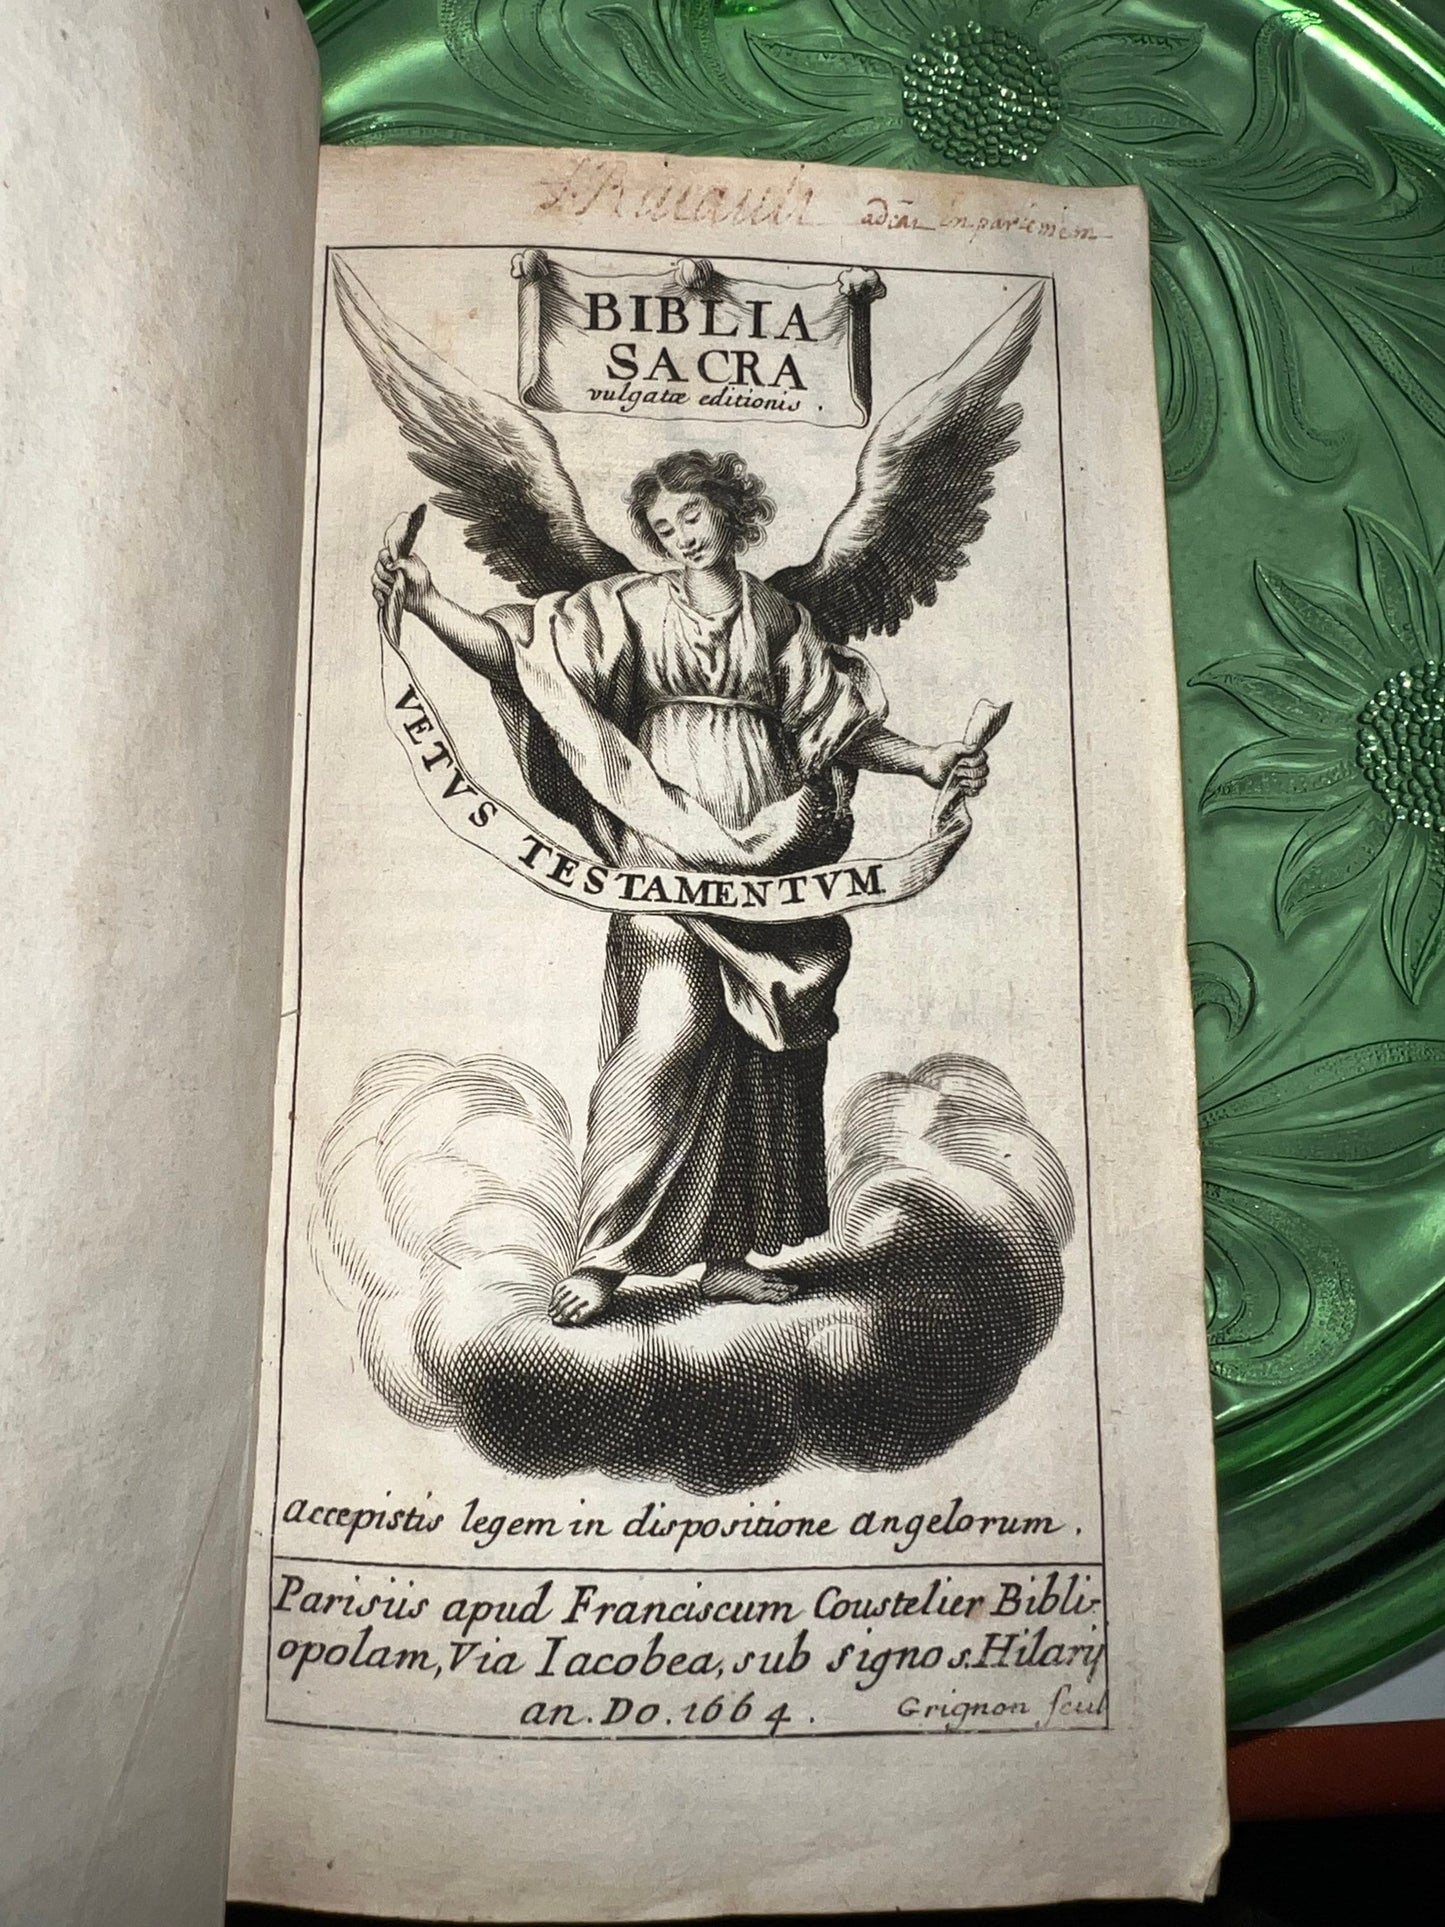 Antique 1664 holy Bible Latin vulgate sacra biblia vellum bound divided into 3 parts 1600s